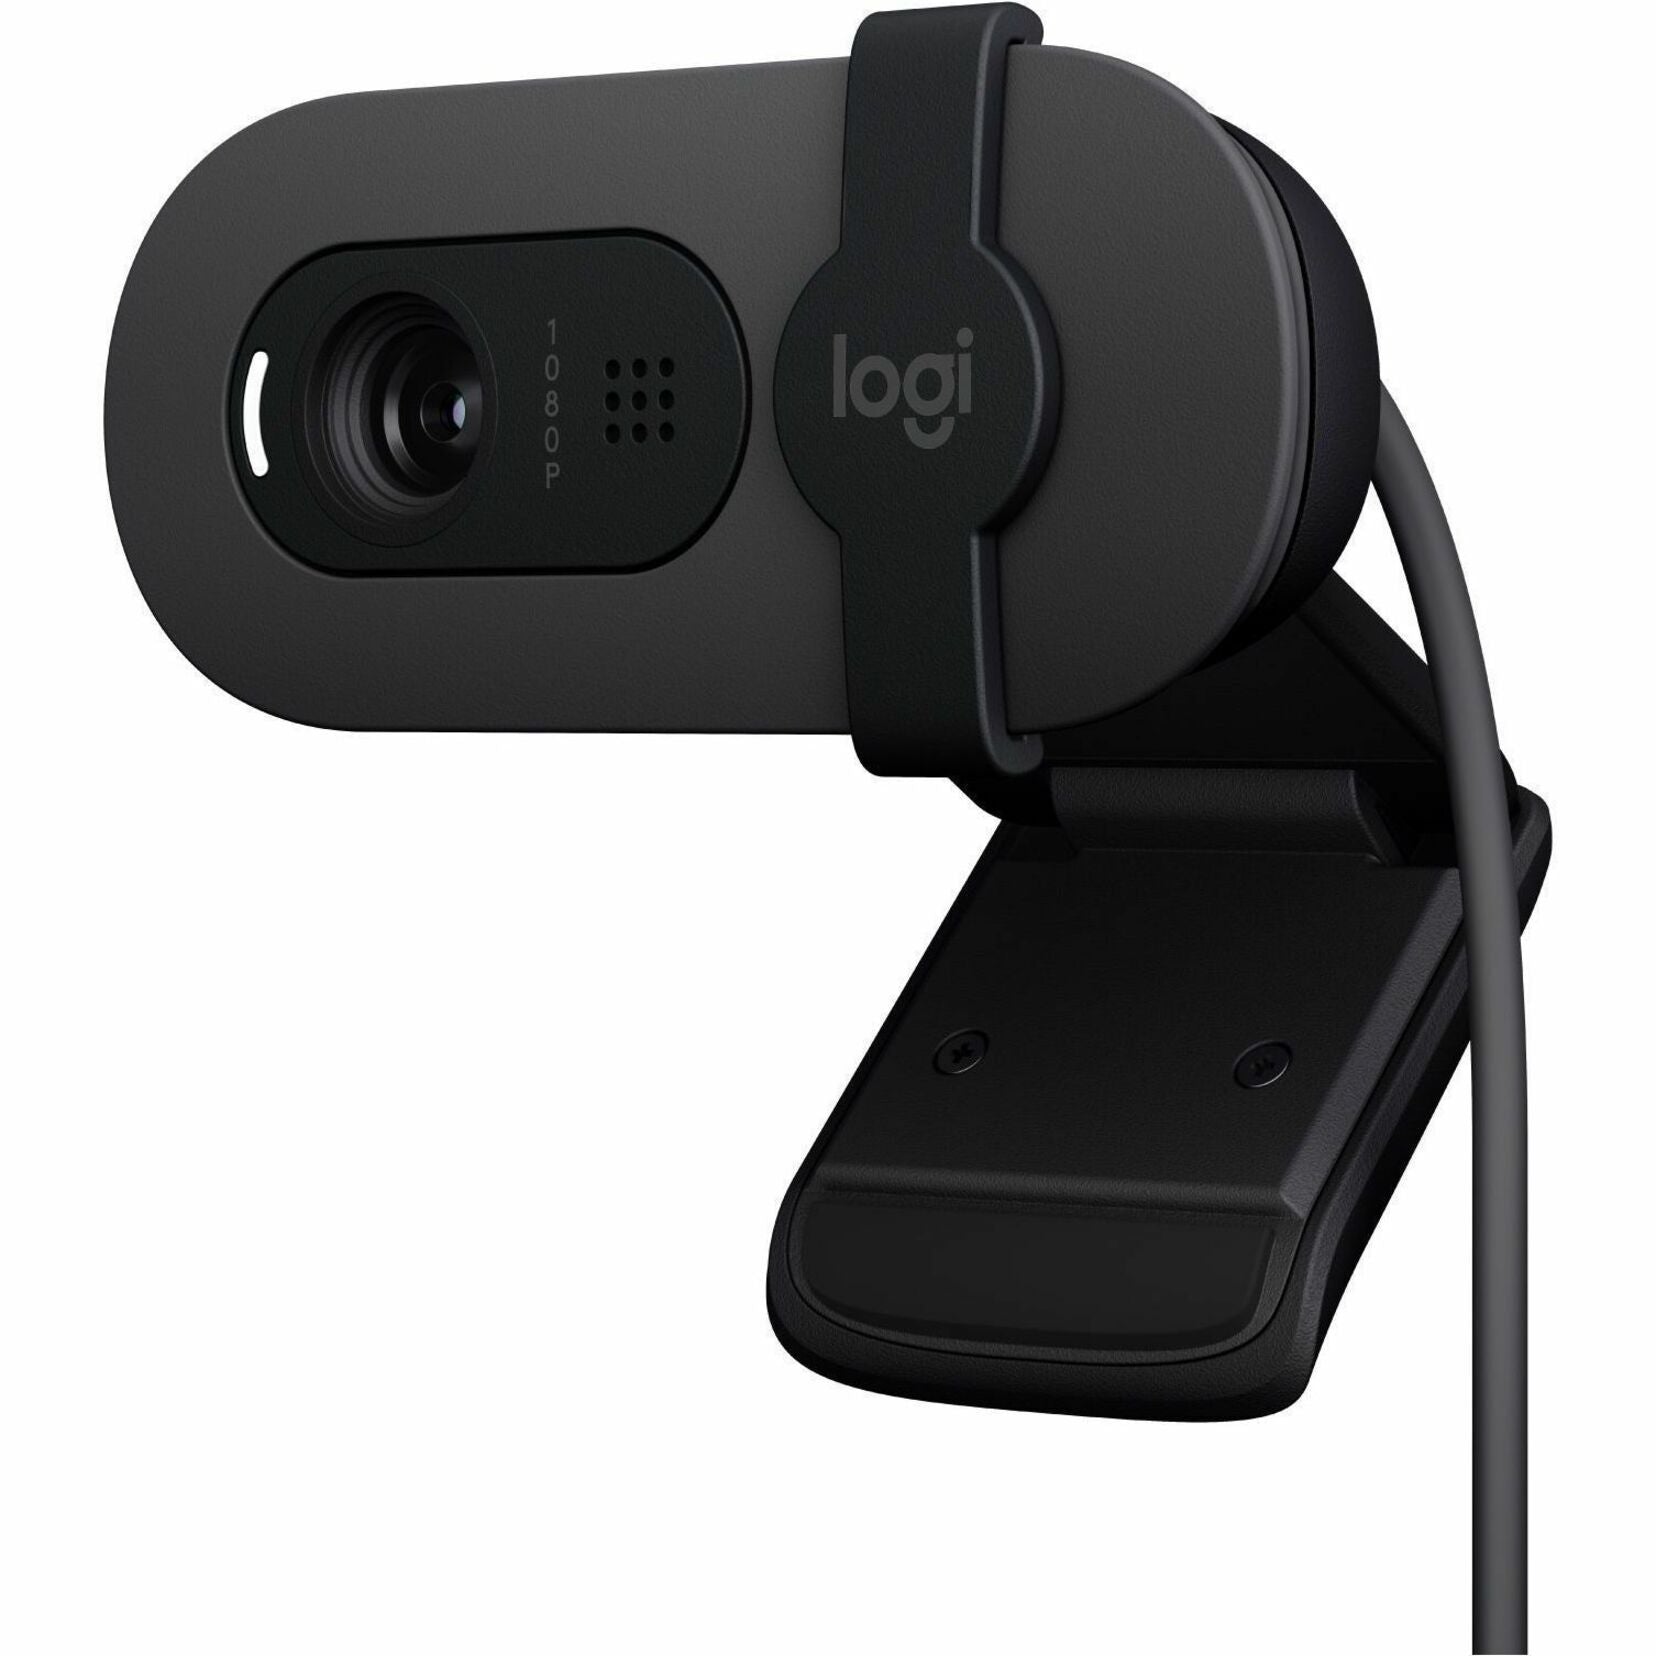 Asus Webcam C3 - Next Level PC